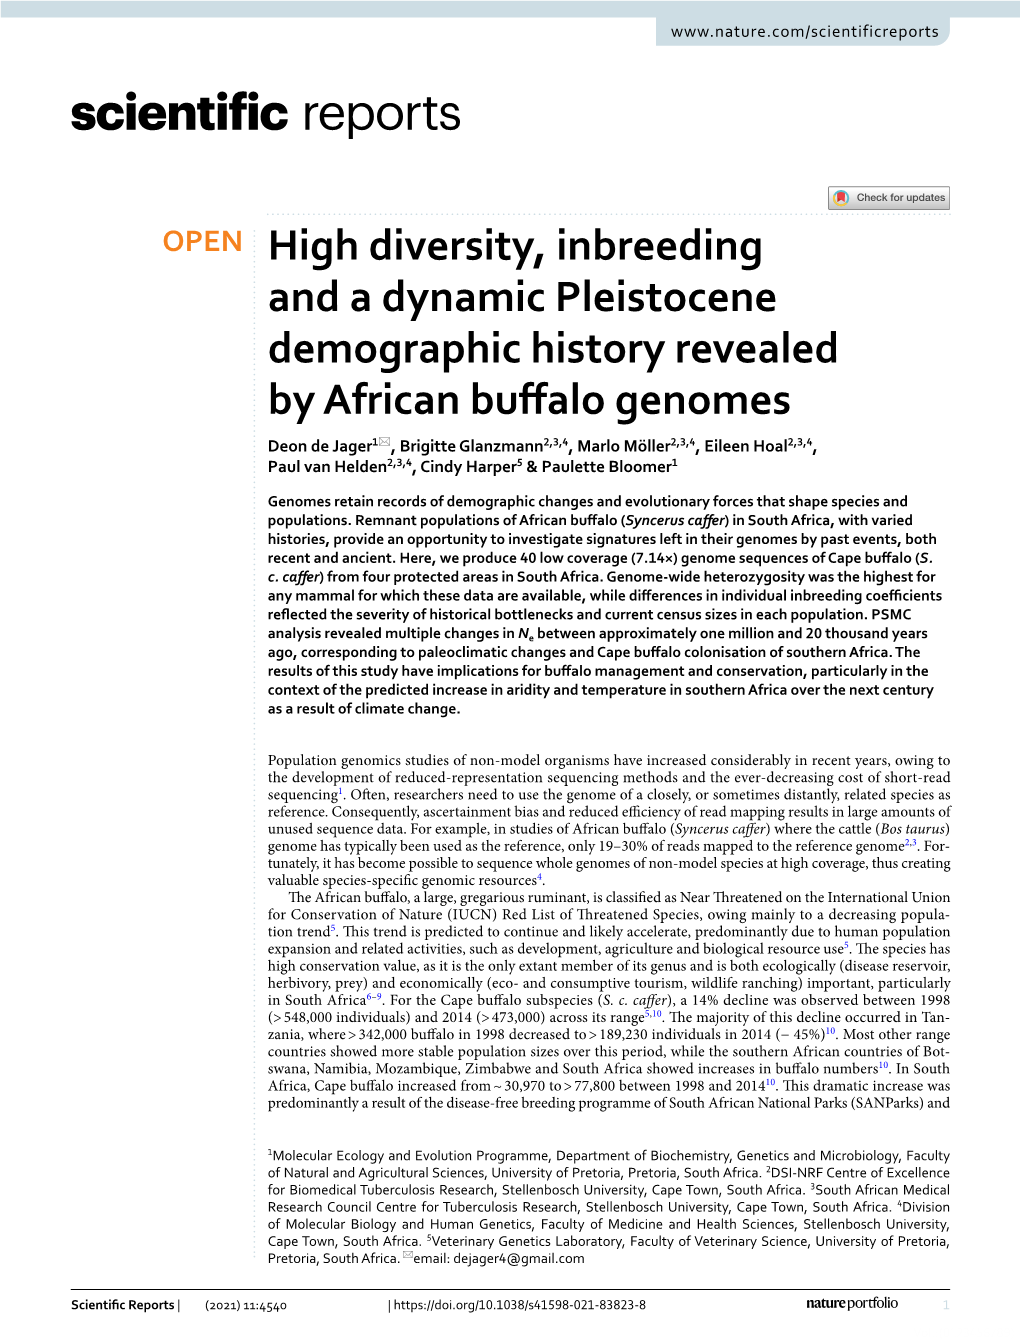 High Diversity, Inbreeding and a Dynamic Pleistocene Demographic